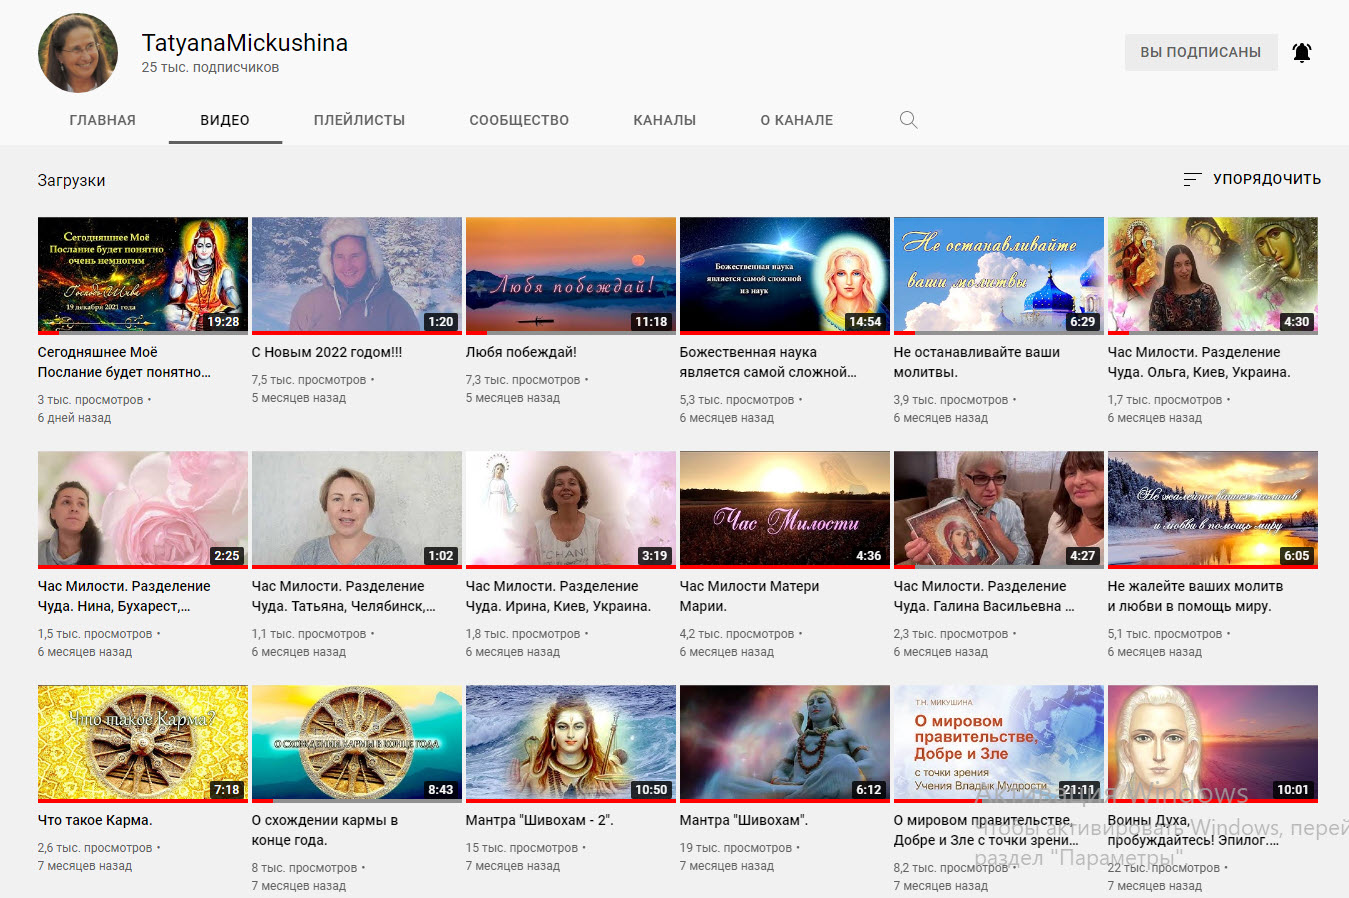 YouTube-канал TatyanaMickushina